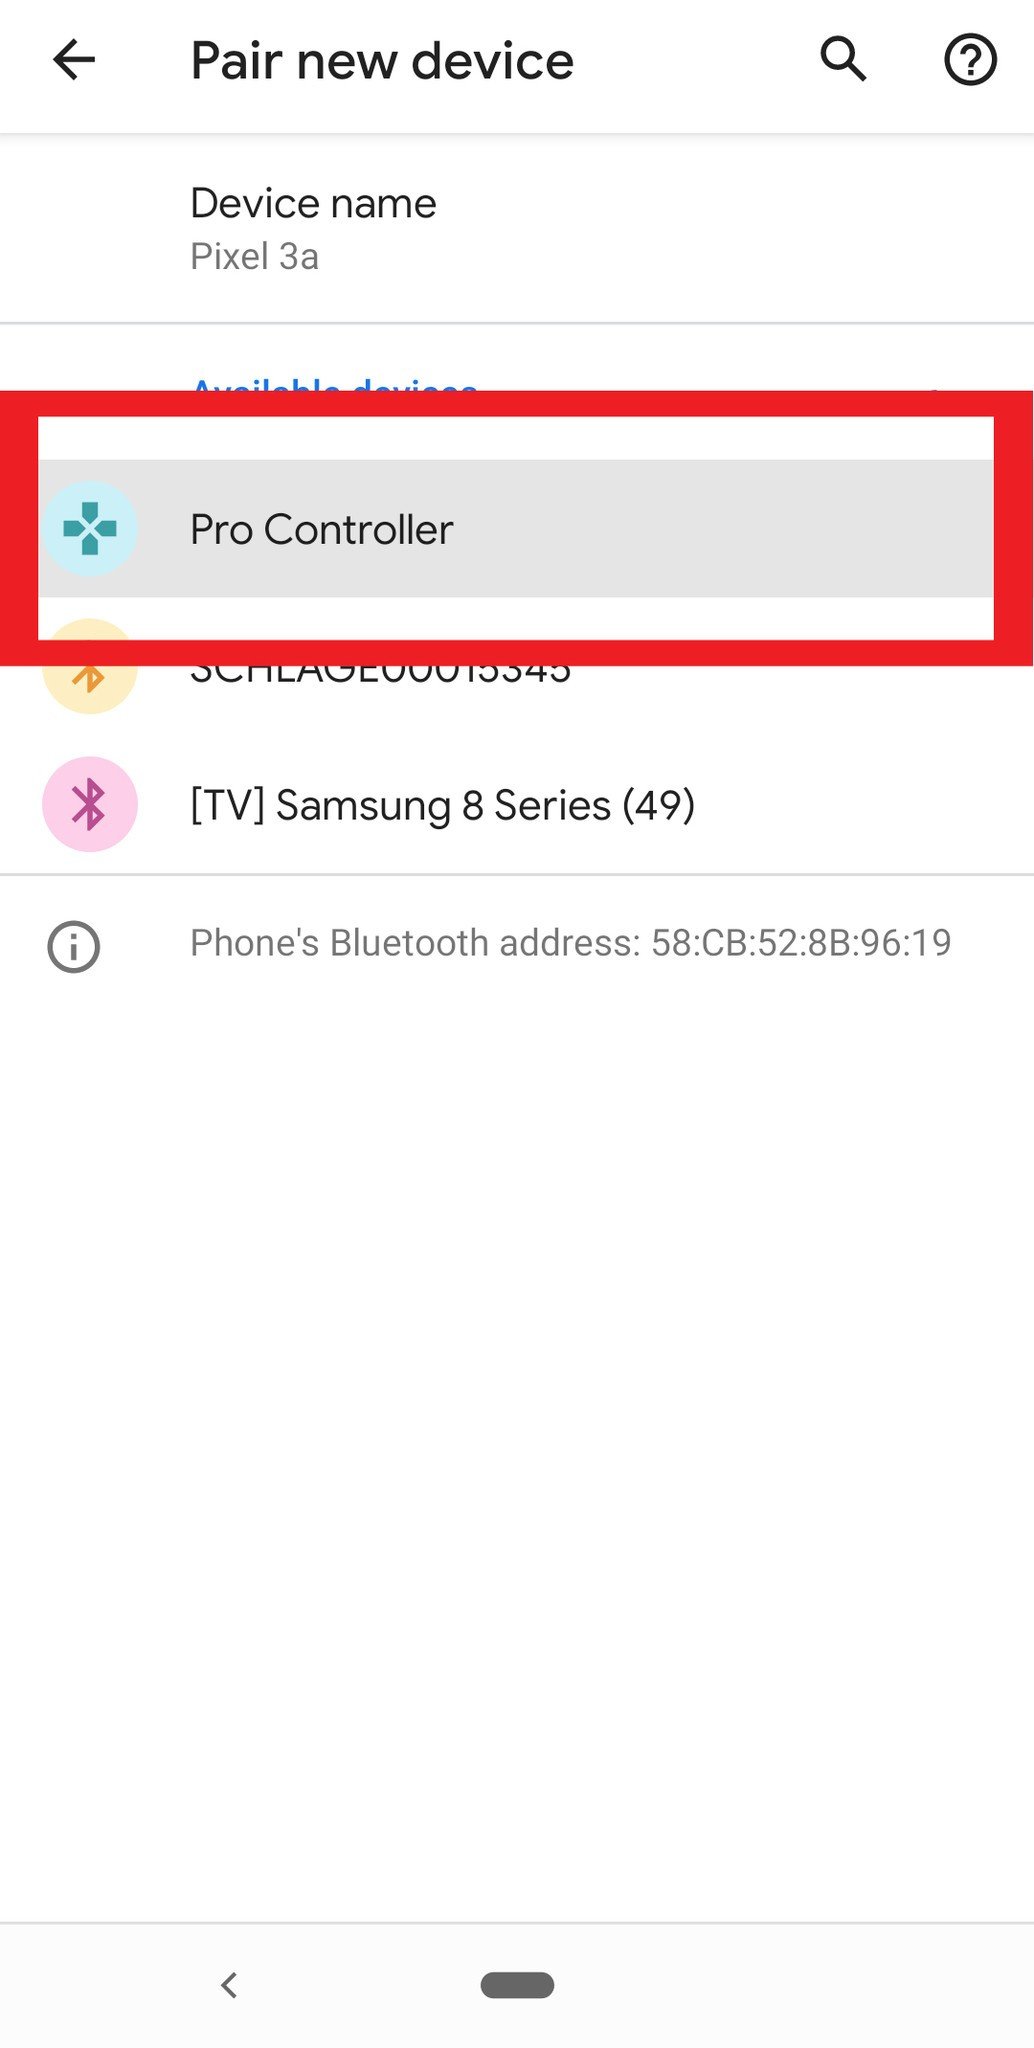 Selectin Pro Controller on Pixel 3a